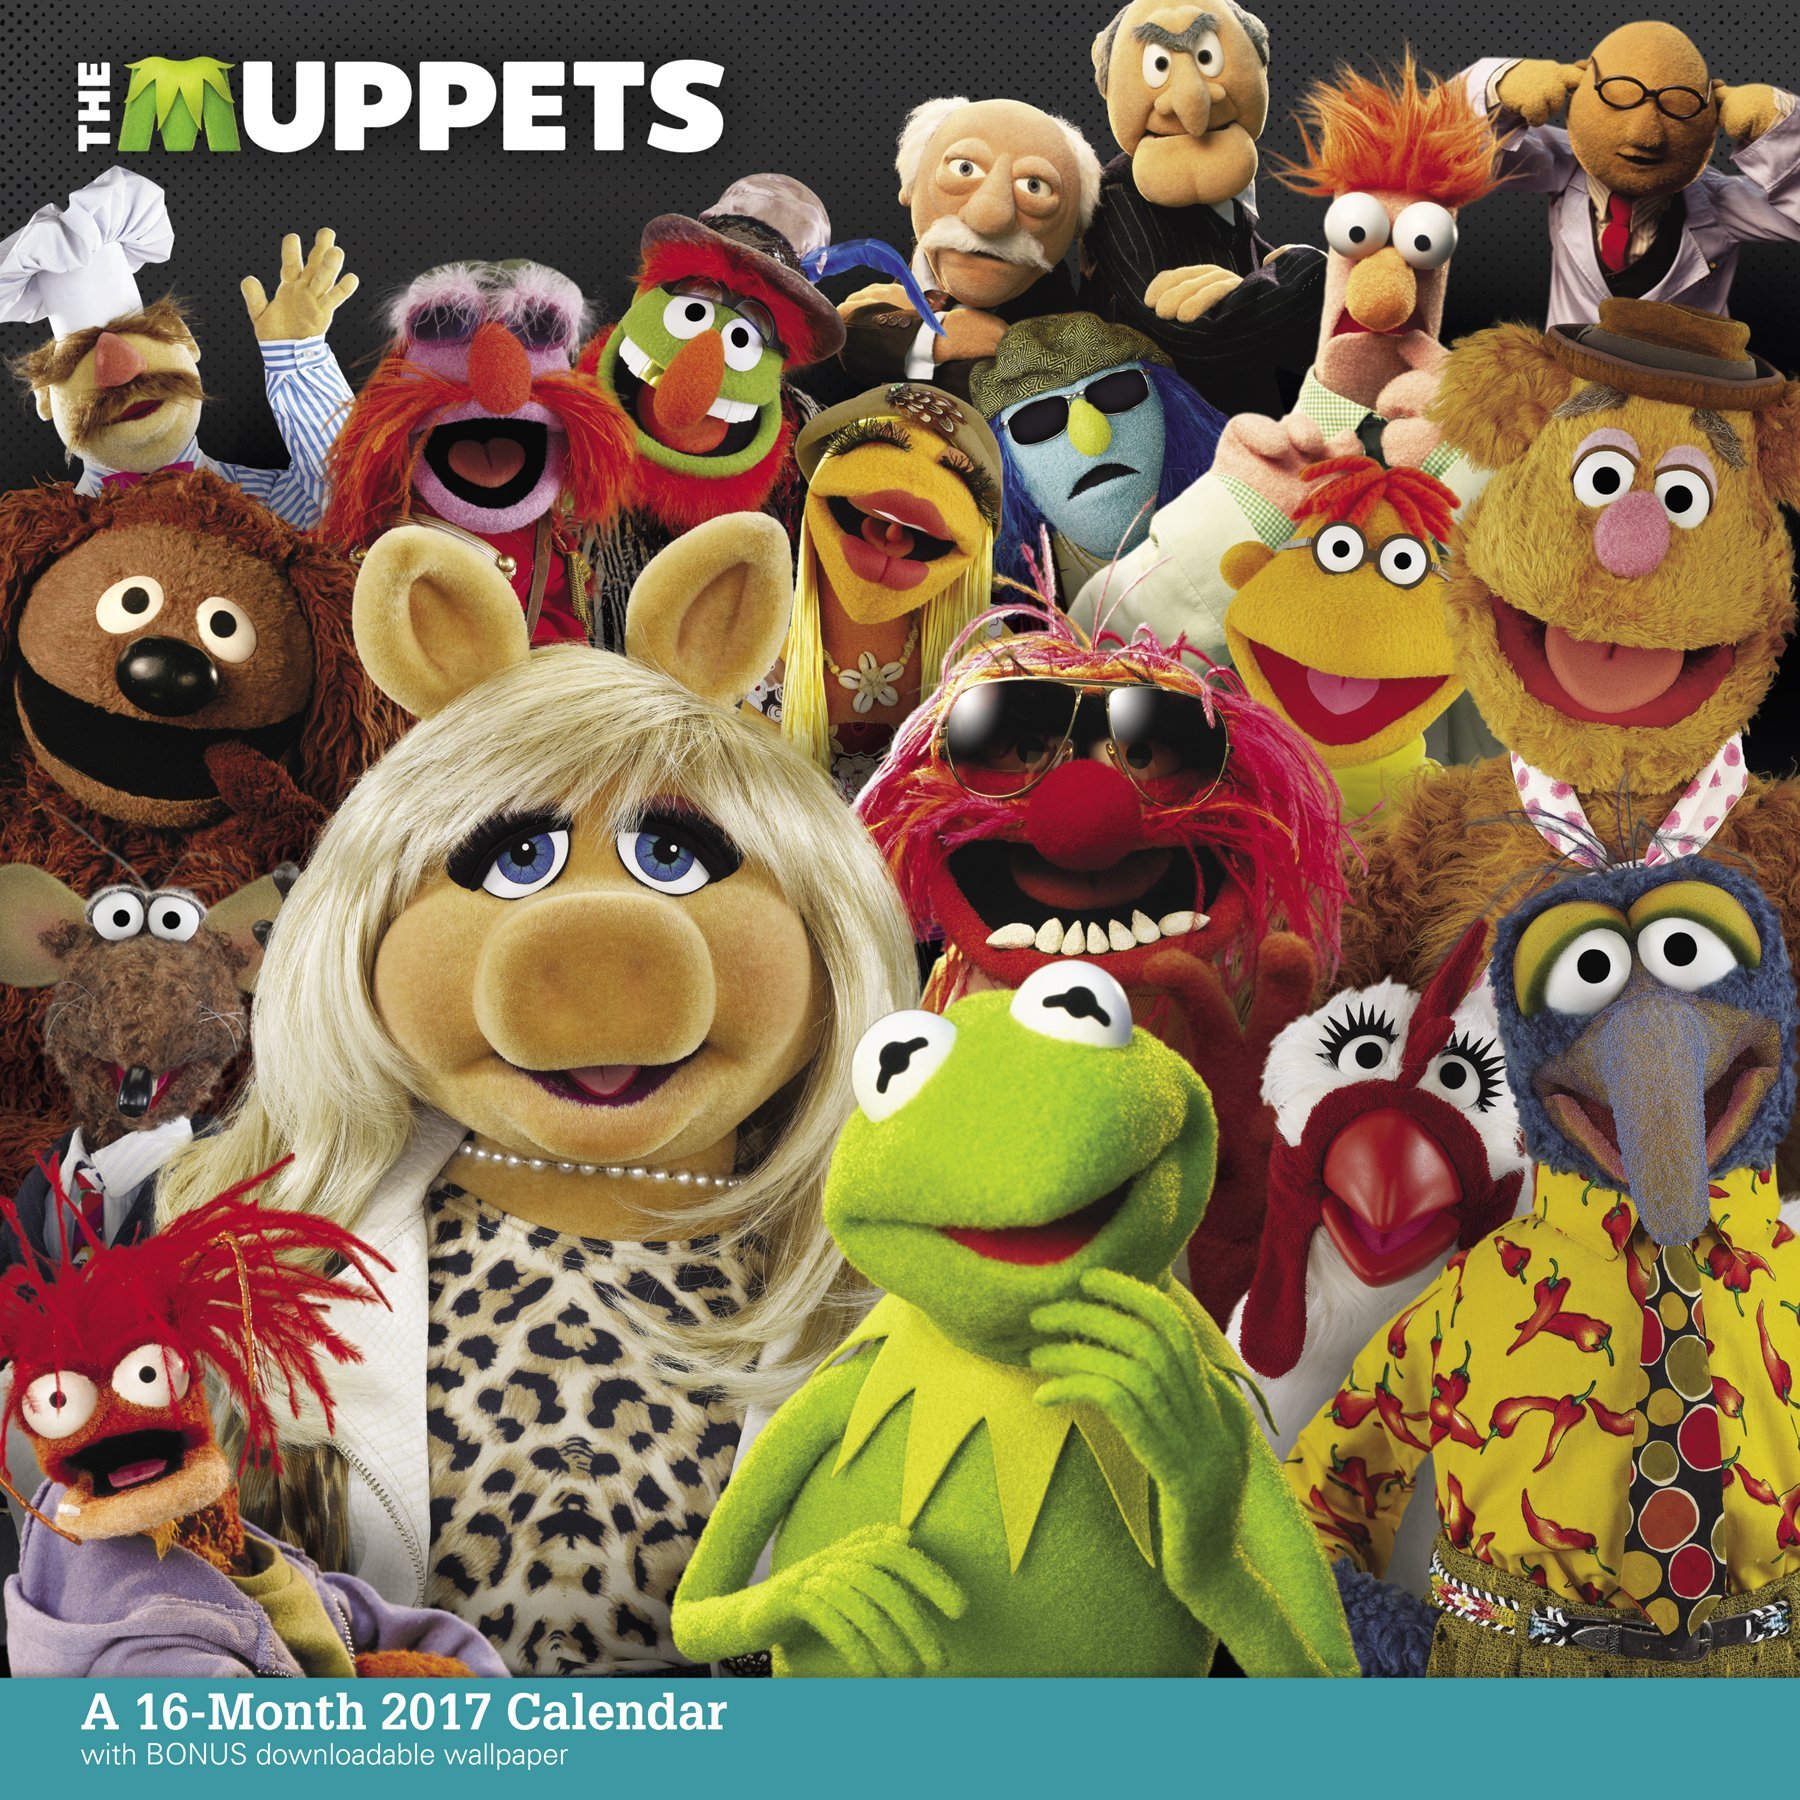 The Muppets 2017 Calendar | Muppet Wiki | FANDOM powered by Wikia